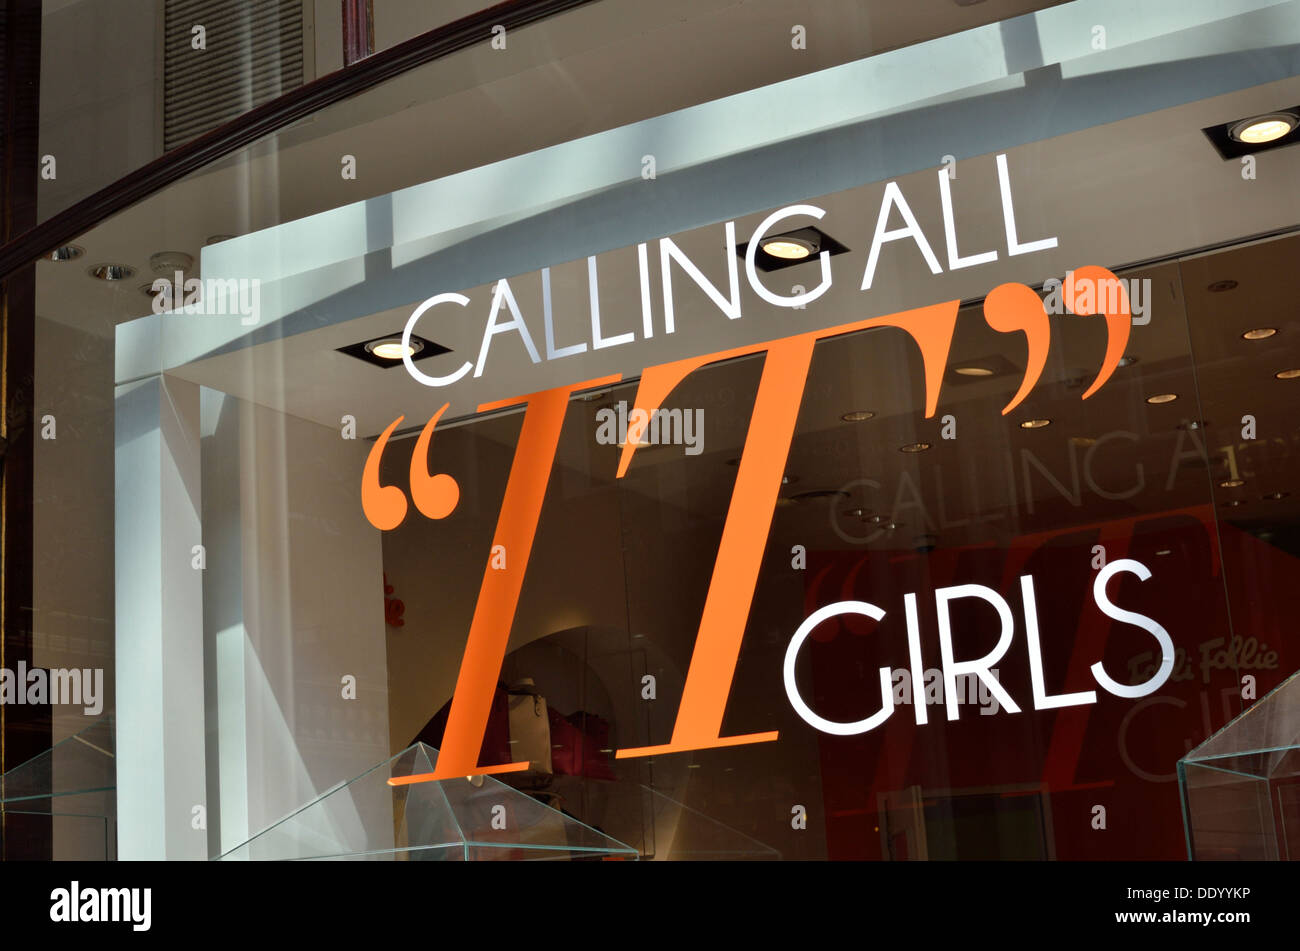 'Calling All IT Girls' sign on a shop window, Leeds, UK Stock Photo